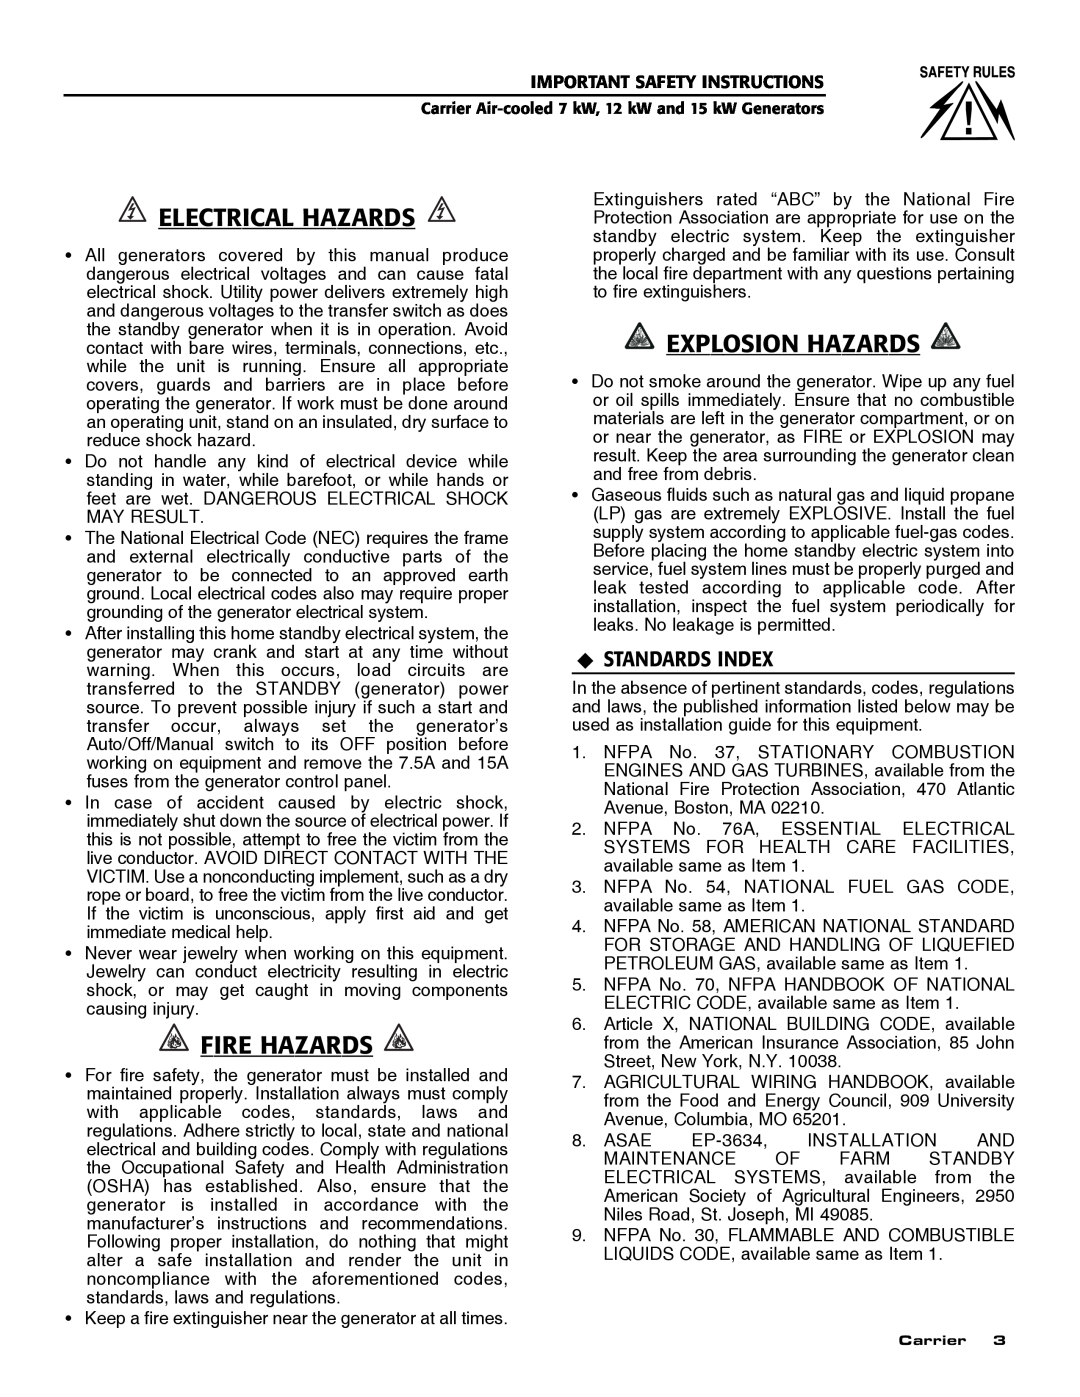 Carrier ASPAS1CCA007 owner manual Electrical Hazards, Fire Hazards, Explosion Hazards, ‹Standards Index 